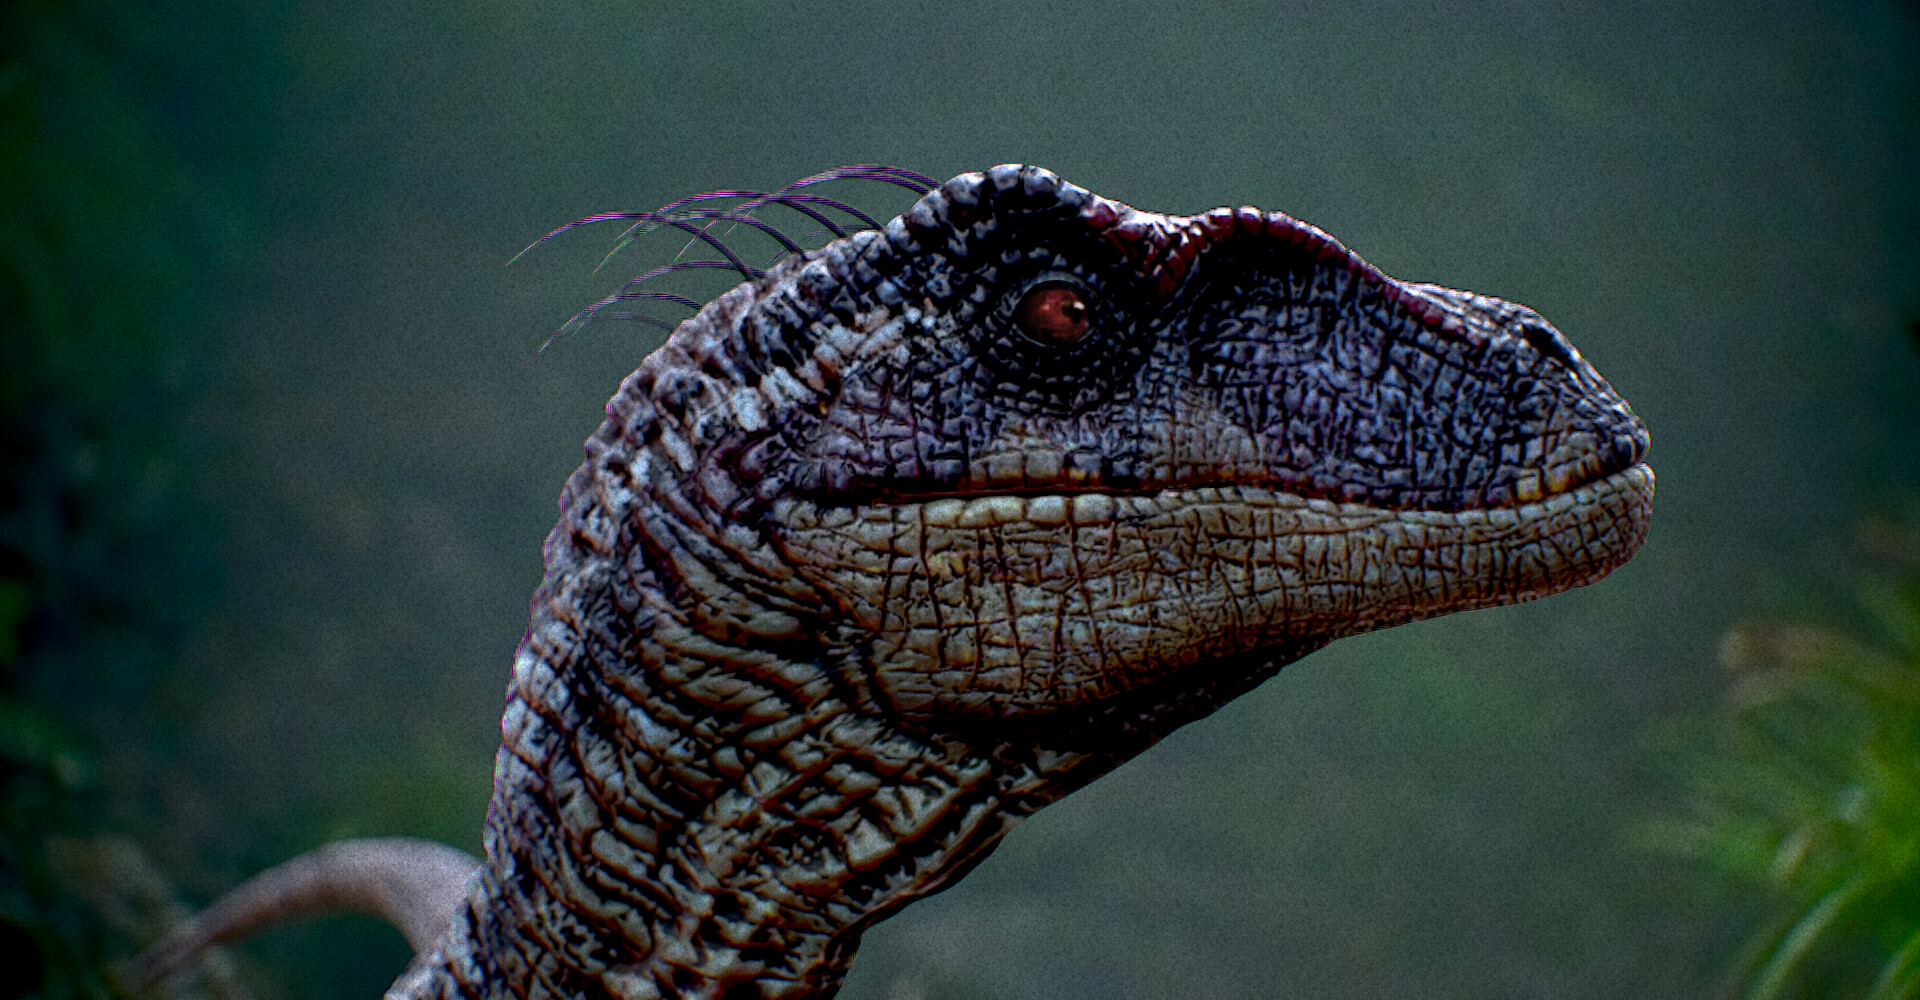 velociraptor jurassic world